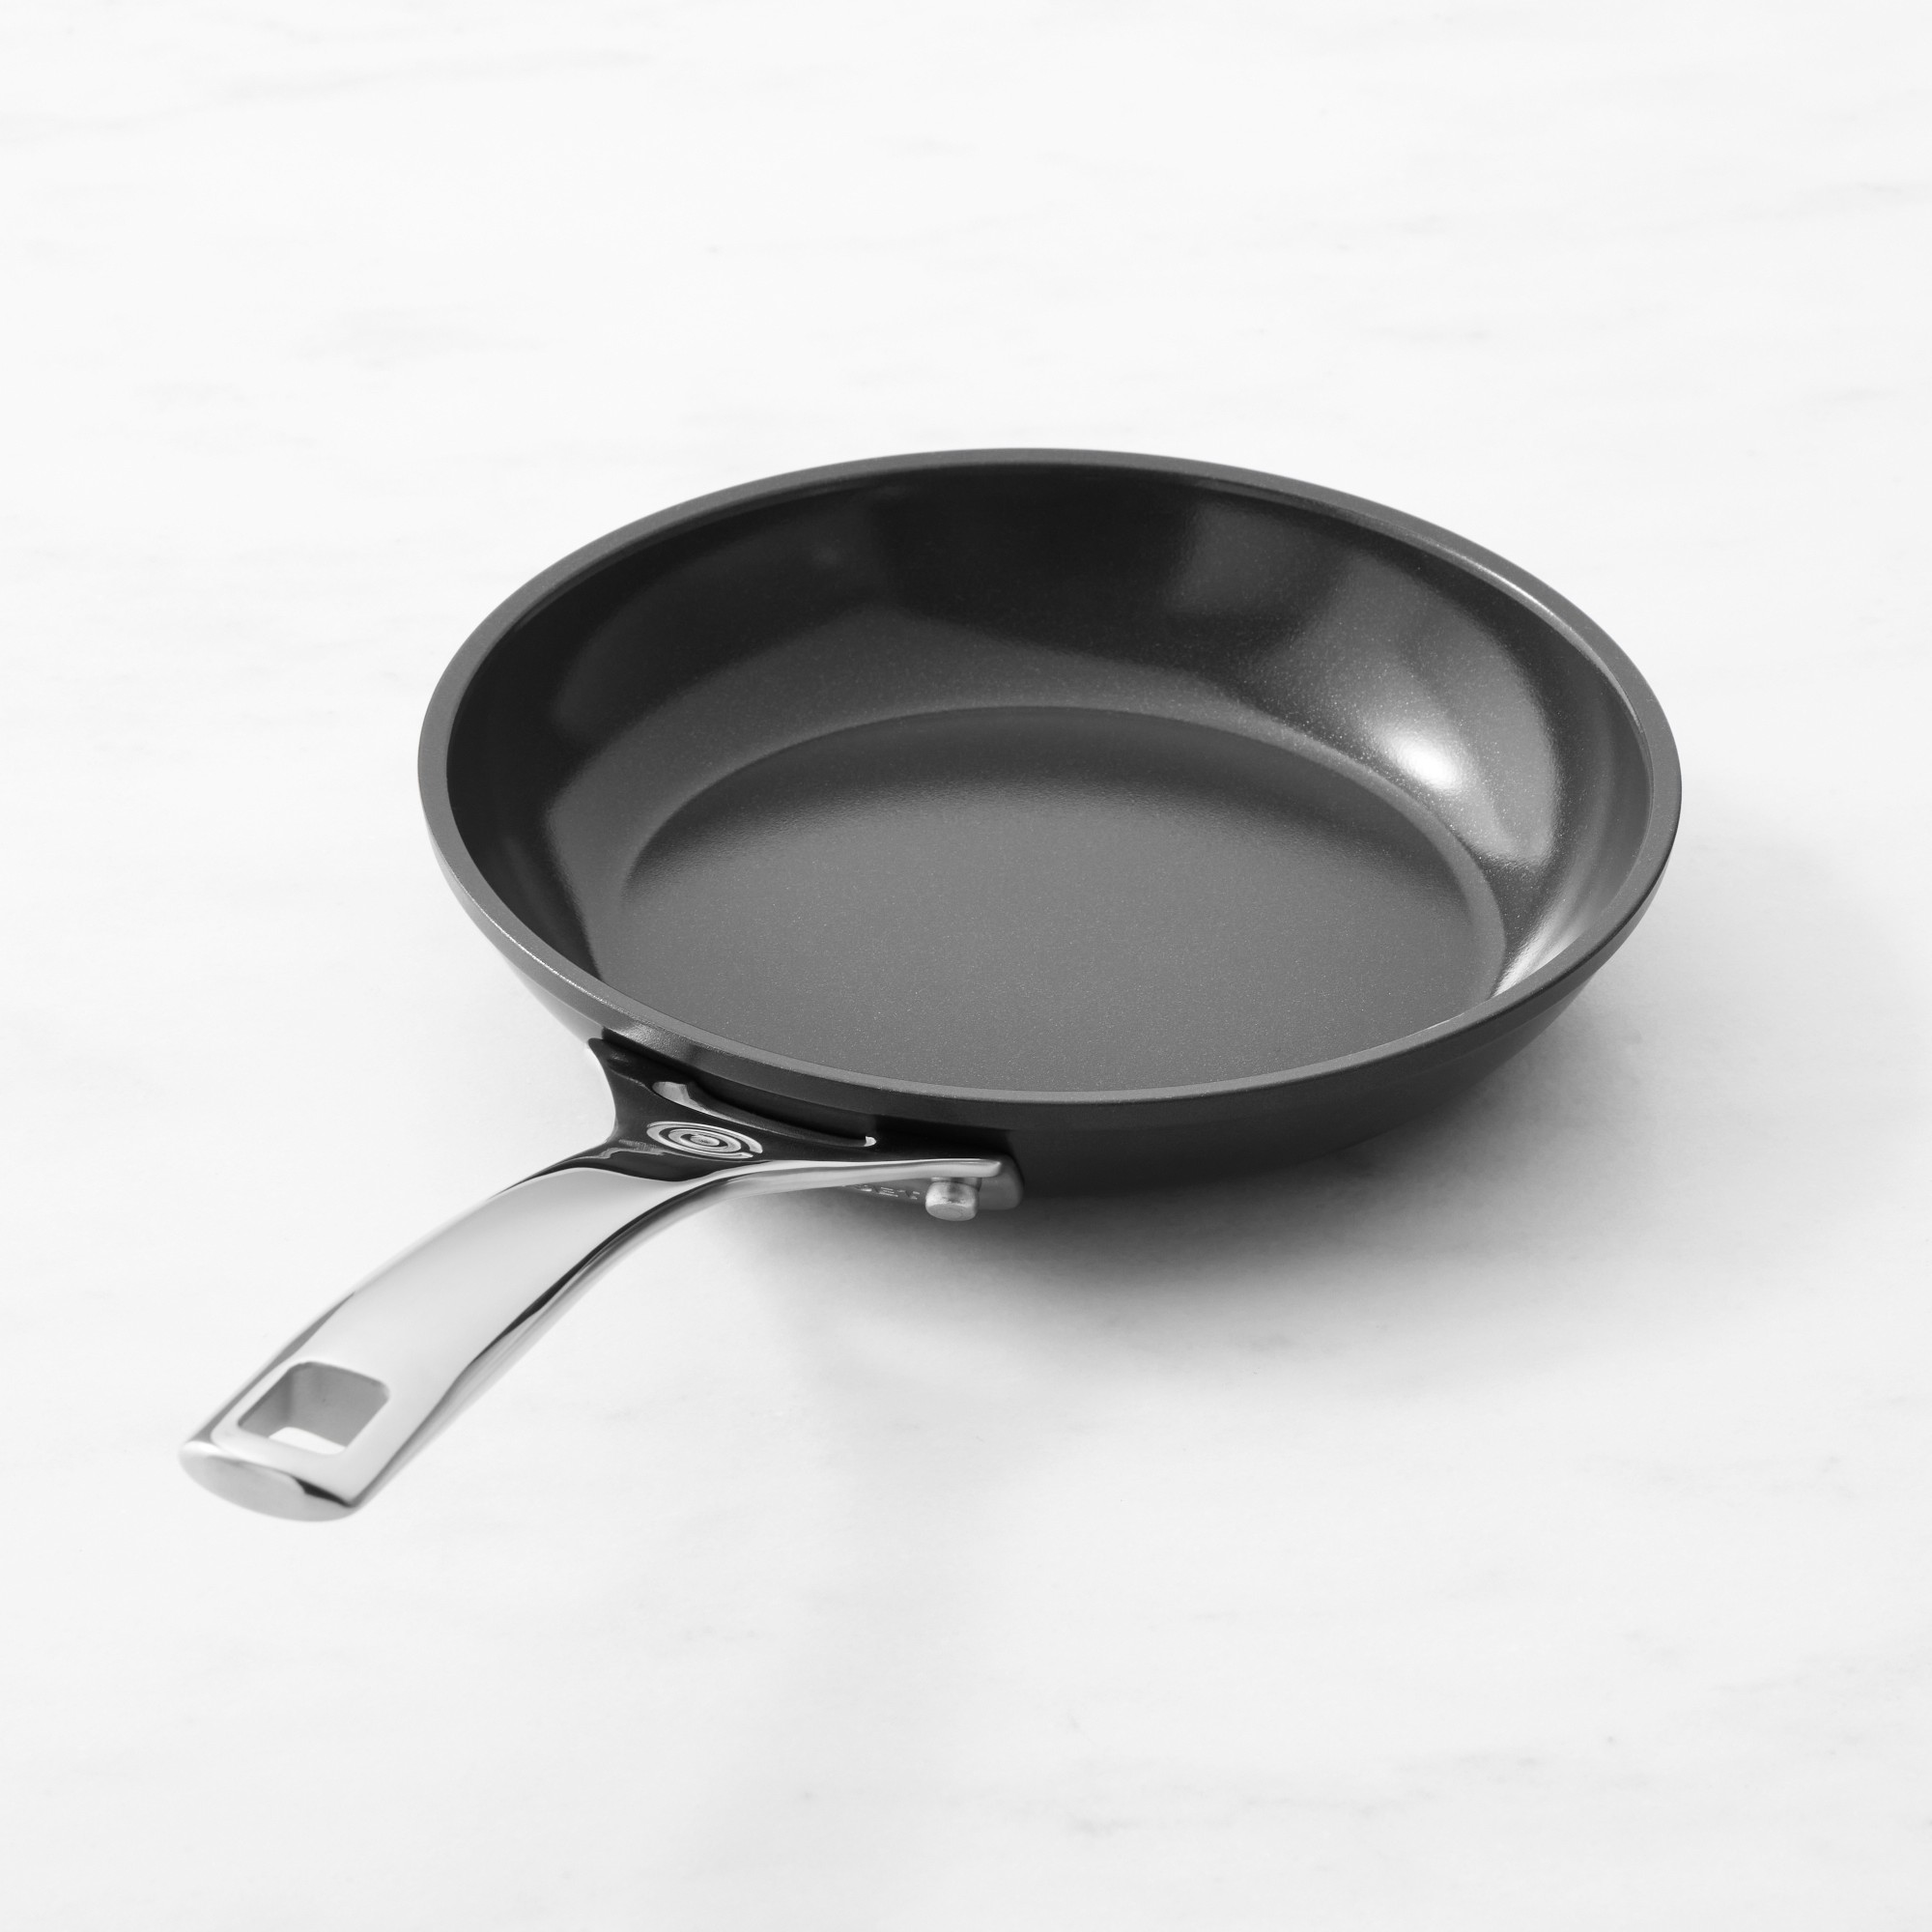 Le Creuset Ceramic Nonstick Fry Pan